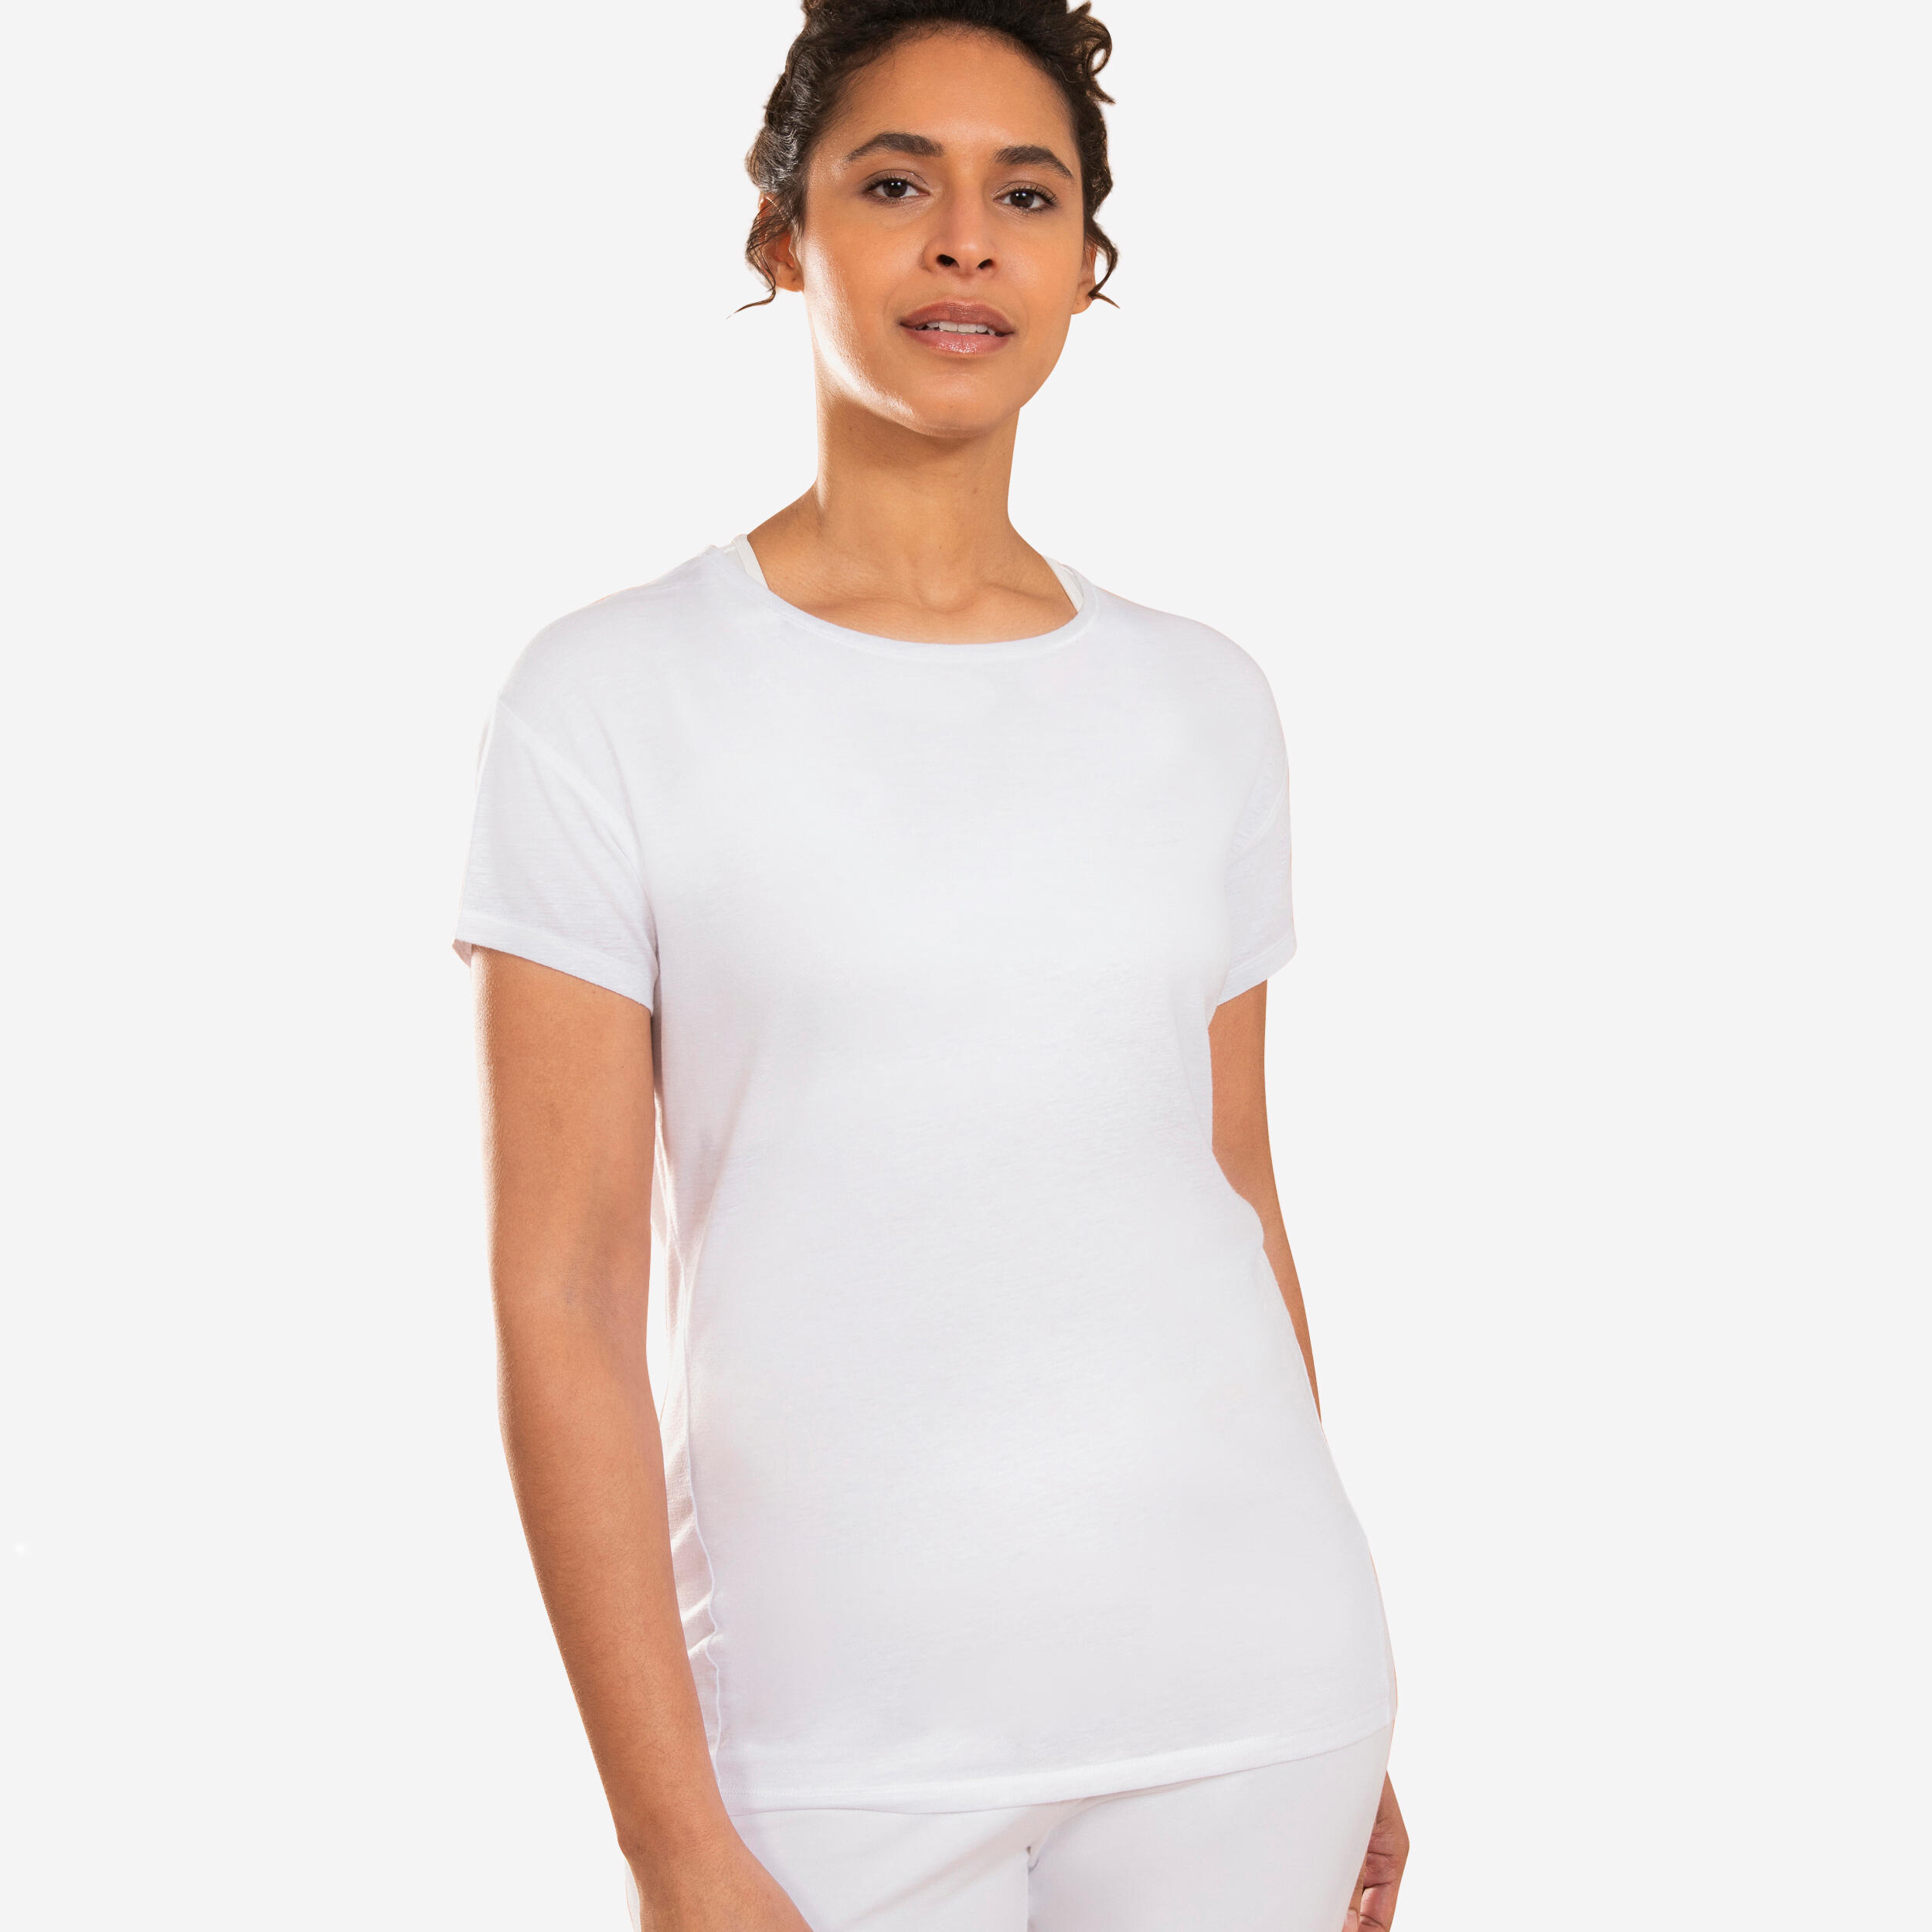 KIMJALY Women's Gentle Yoga T-Shirt - White